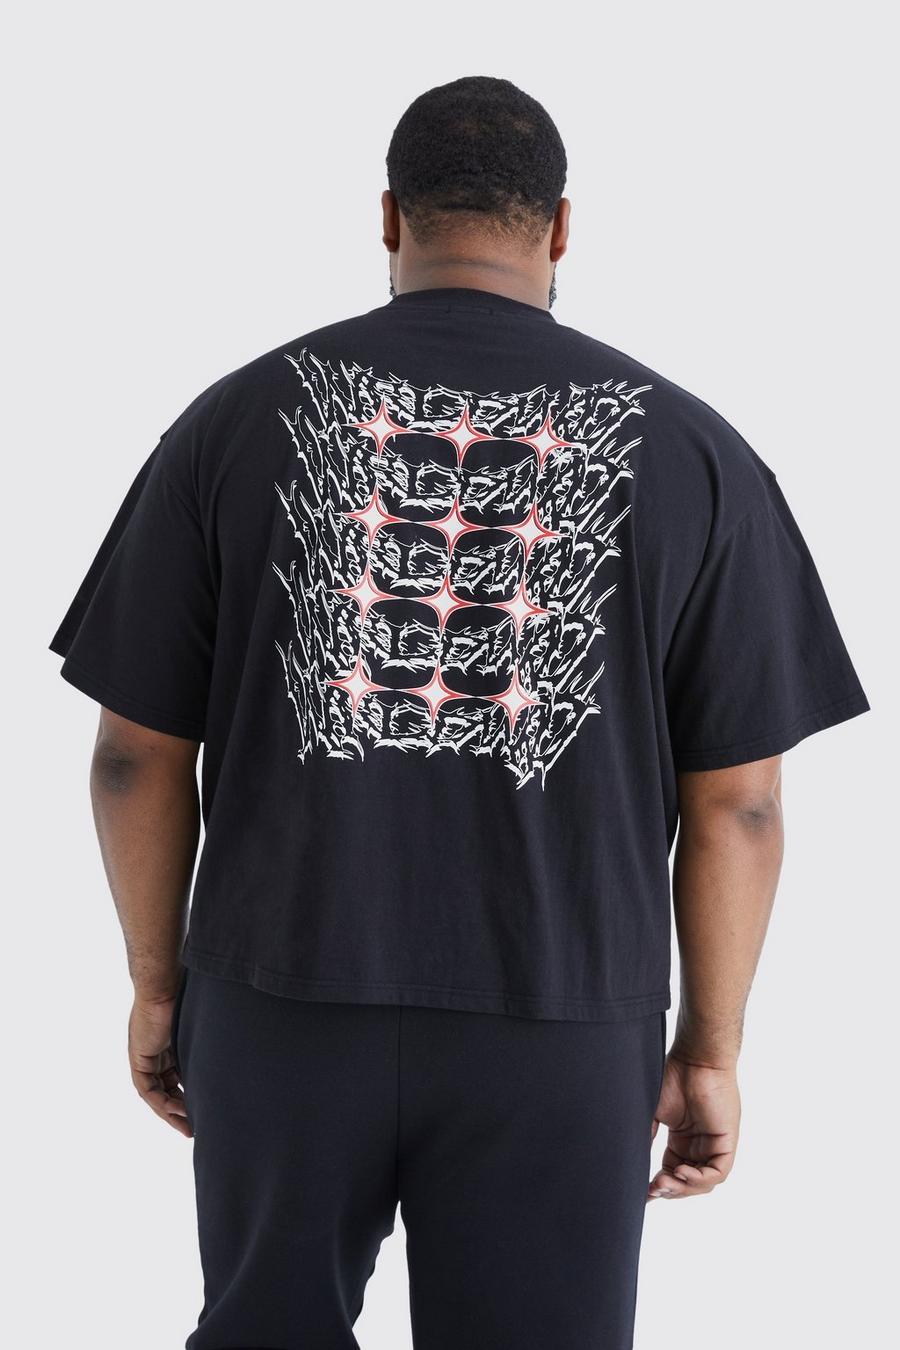 Plus kastiges Oversize T-Shirt mit Grunge Homme Print, Black